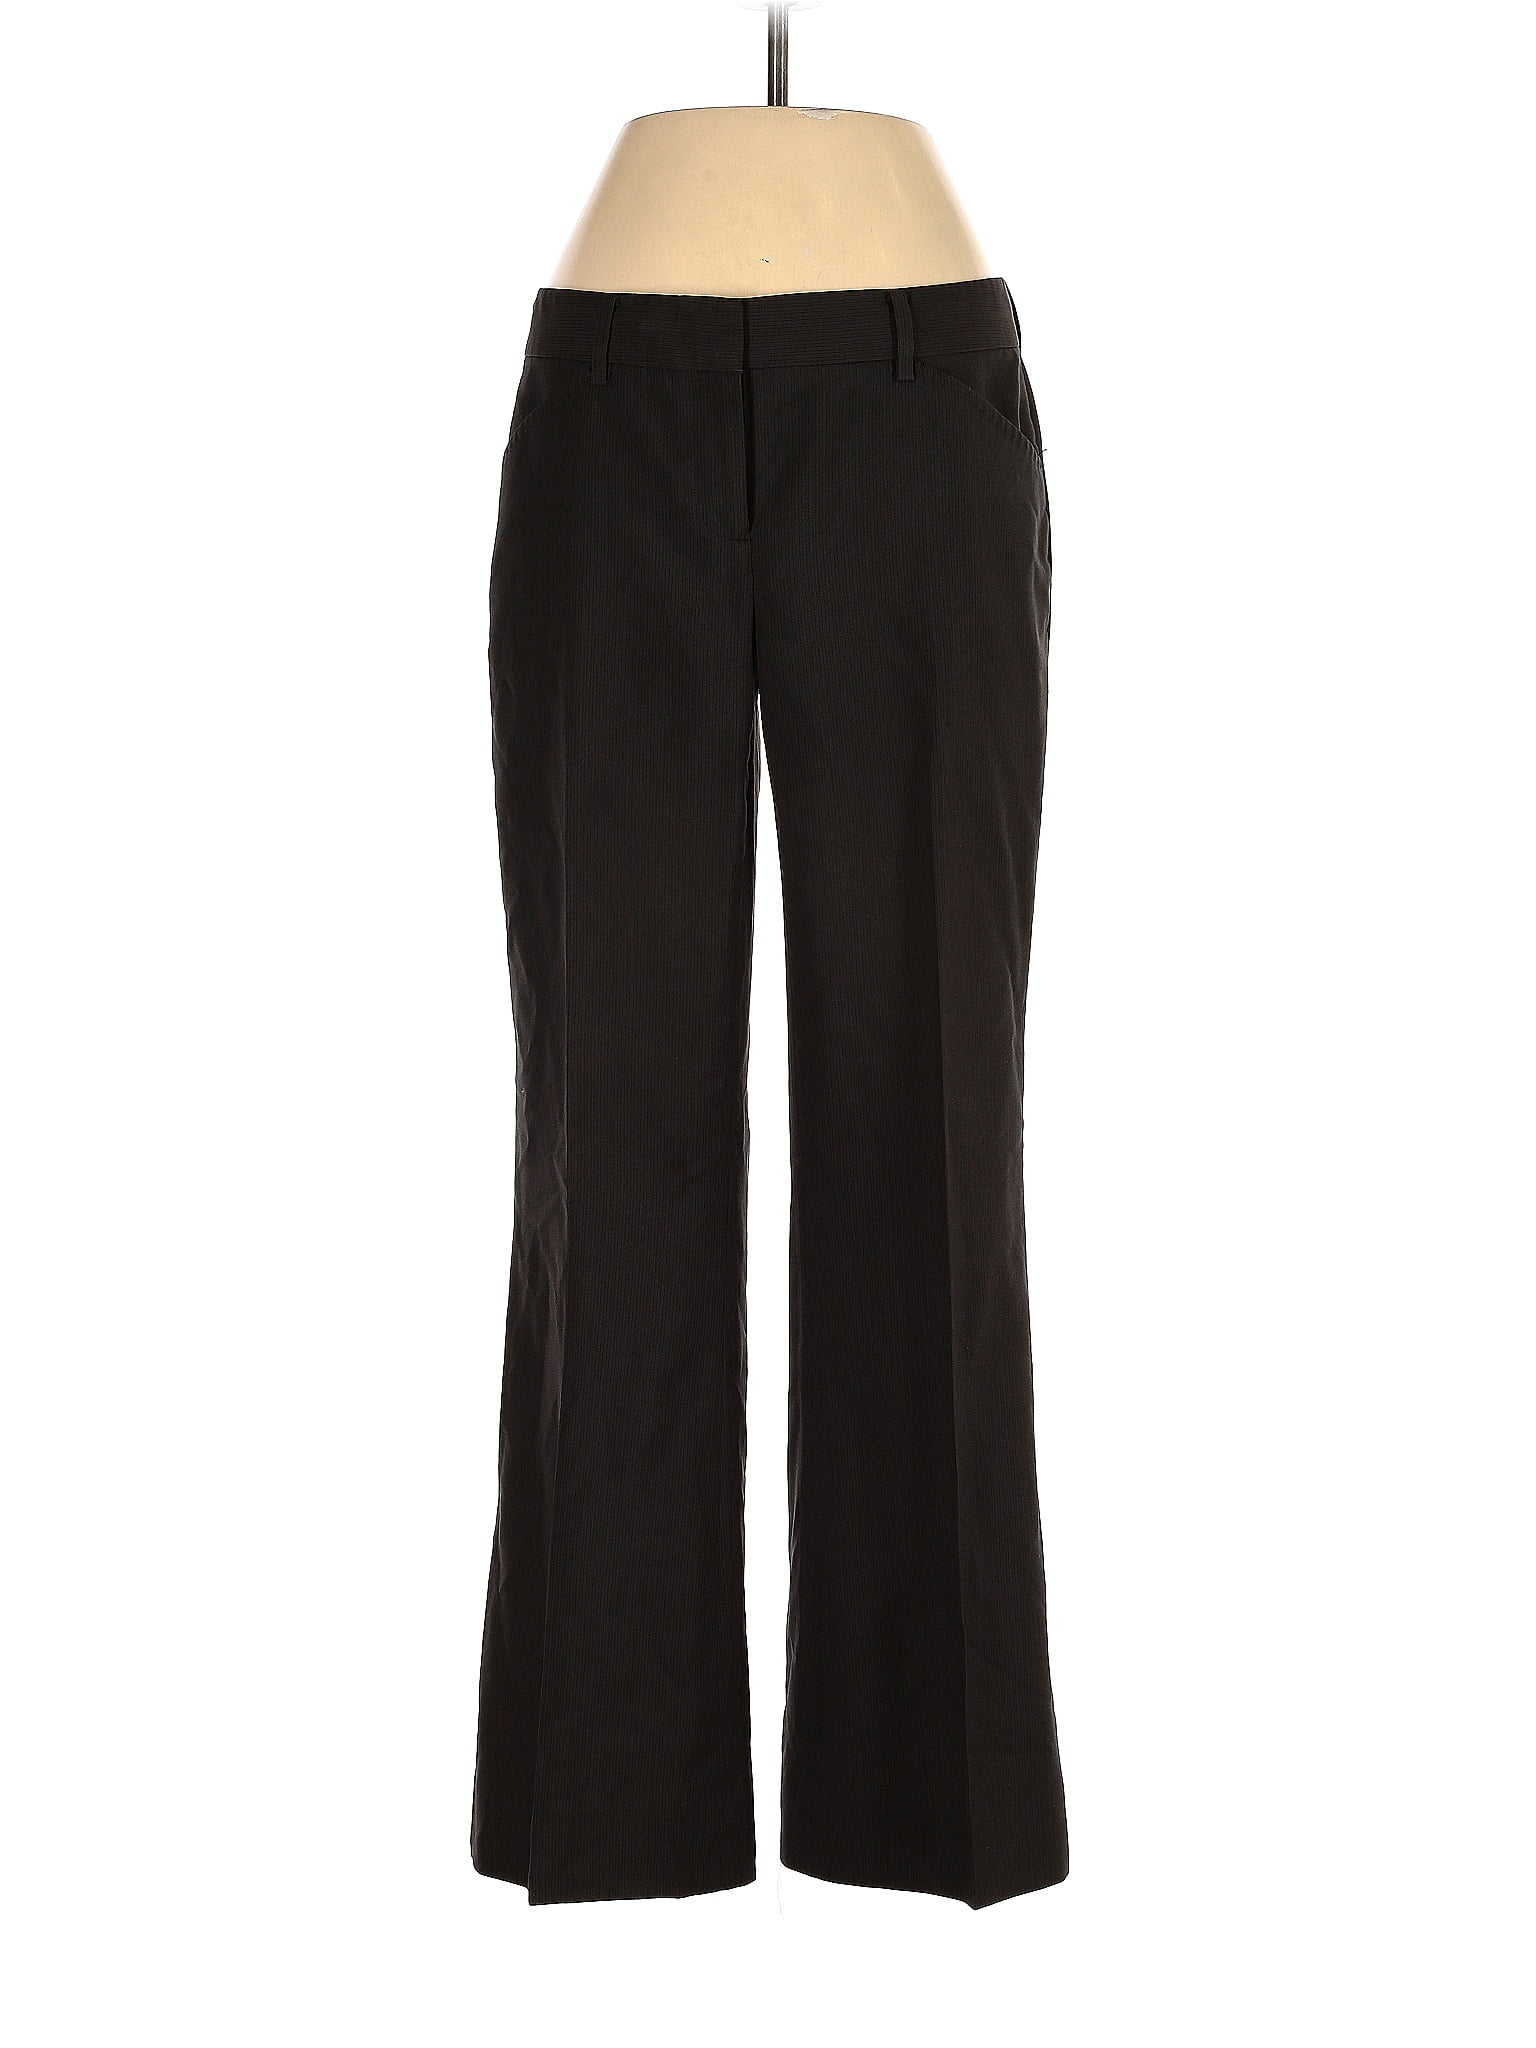 Elie Tahari Stripes Black Dress Pants Size 2 - 83% off | thredUP